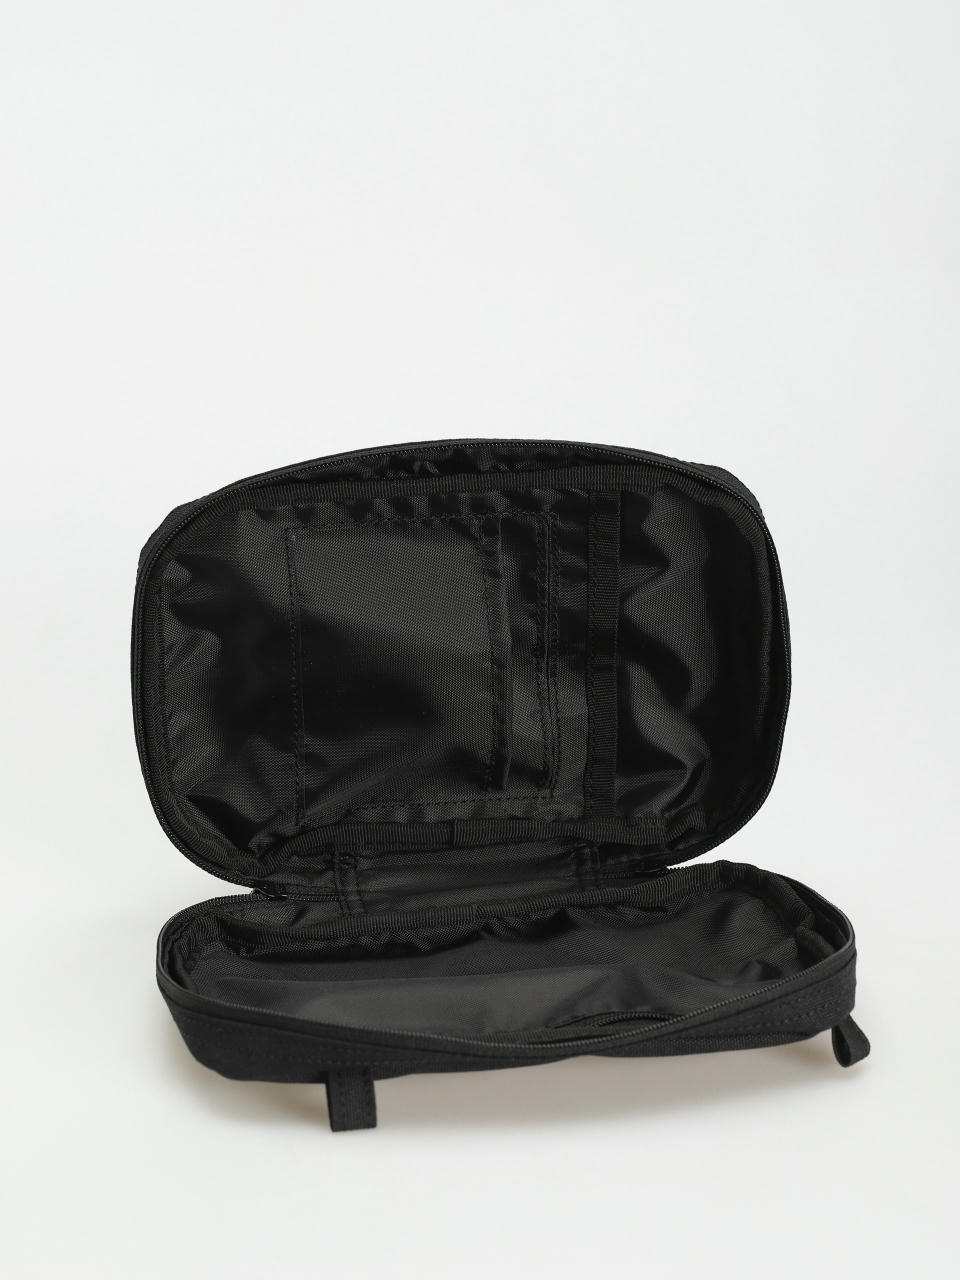 Carhartt Sylvan Travel Bag - Black